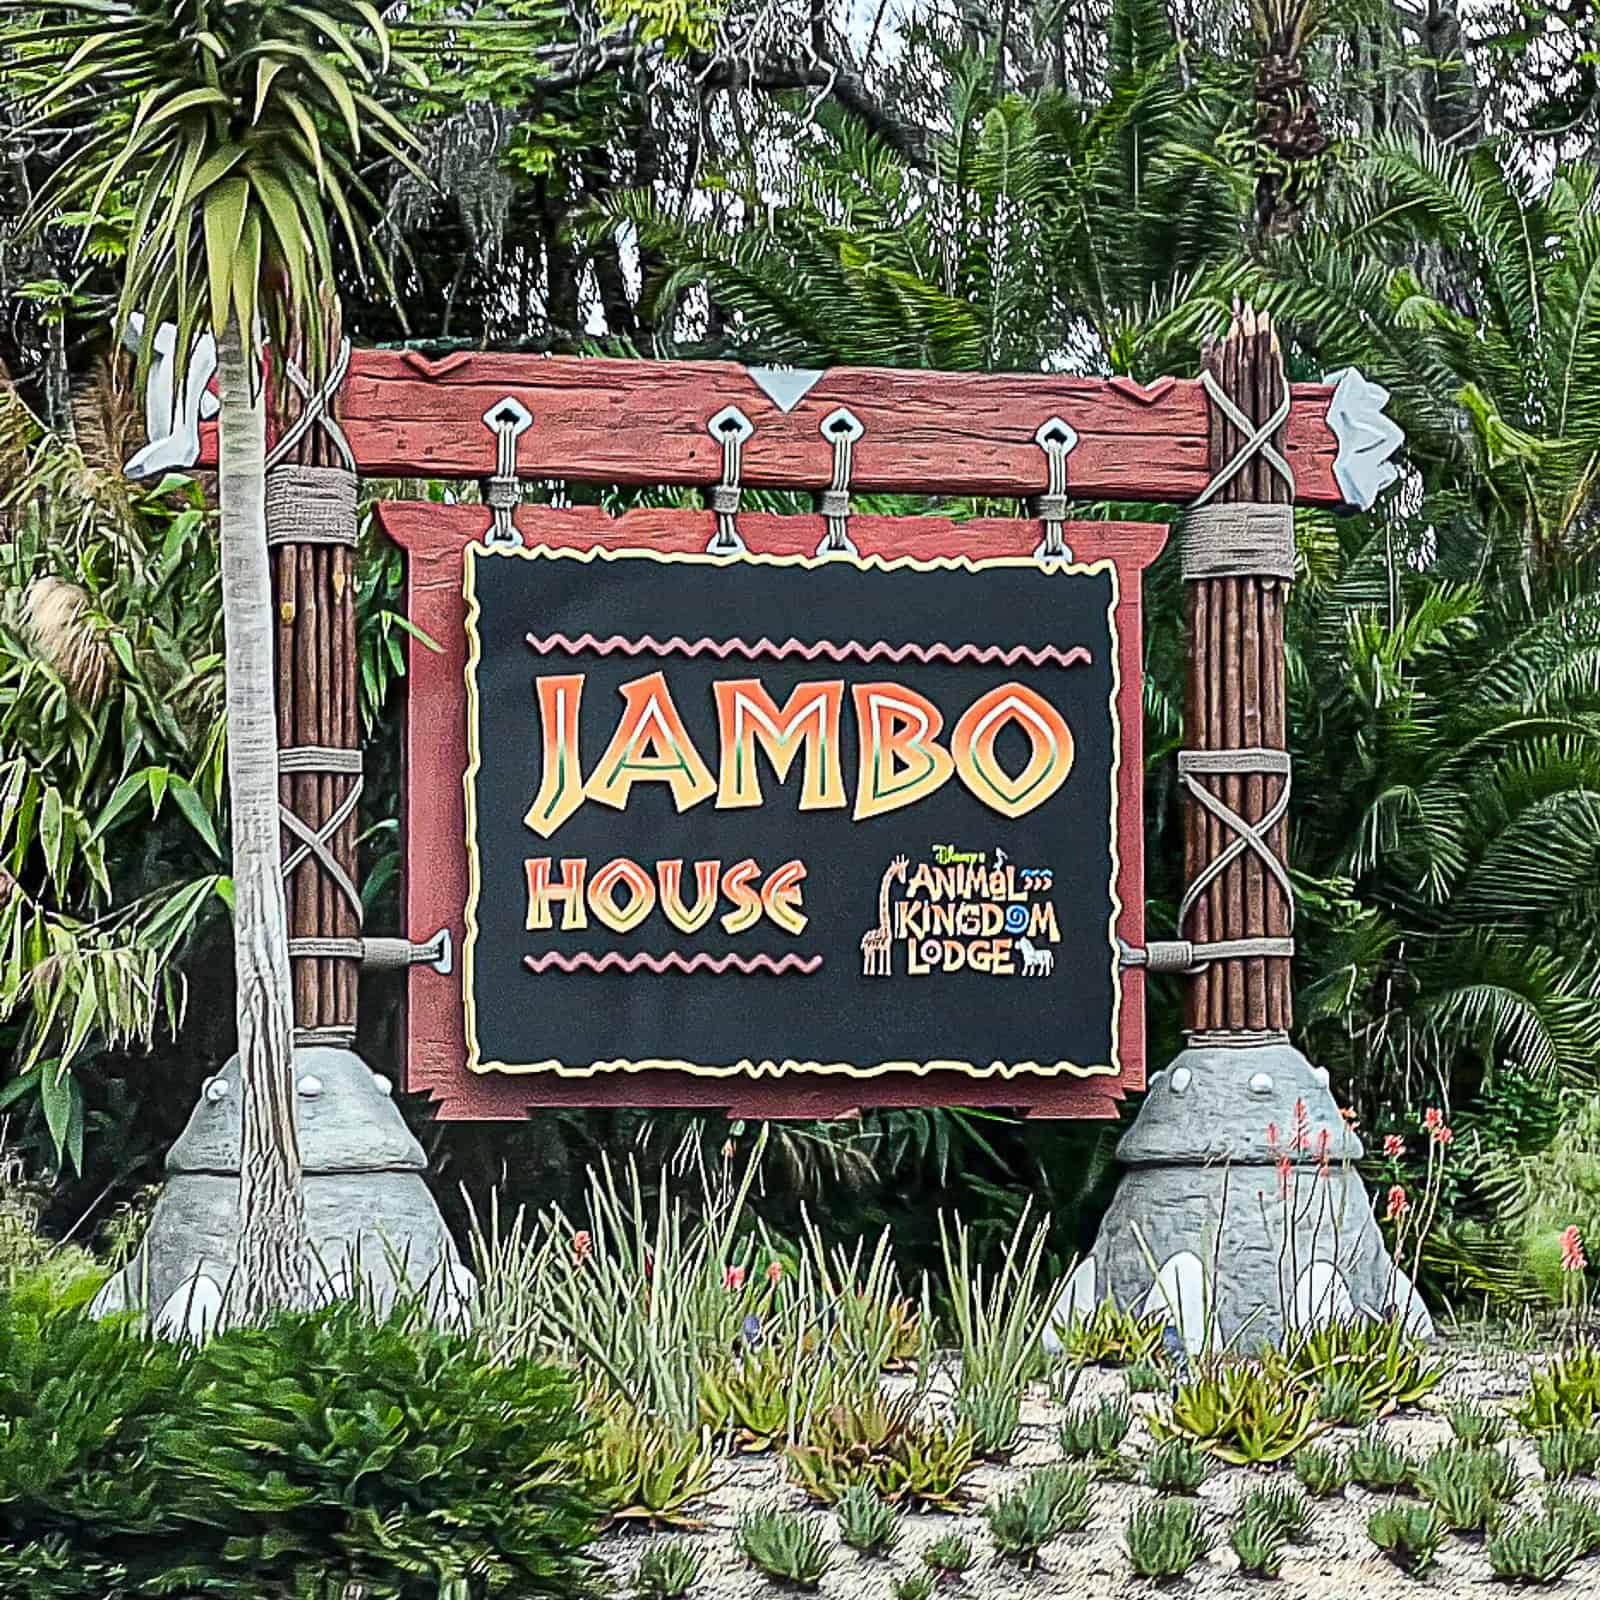 Jambo House Restaurants at Animal Kingdom Lodge at Walt Disney World